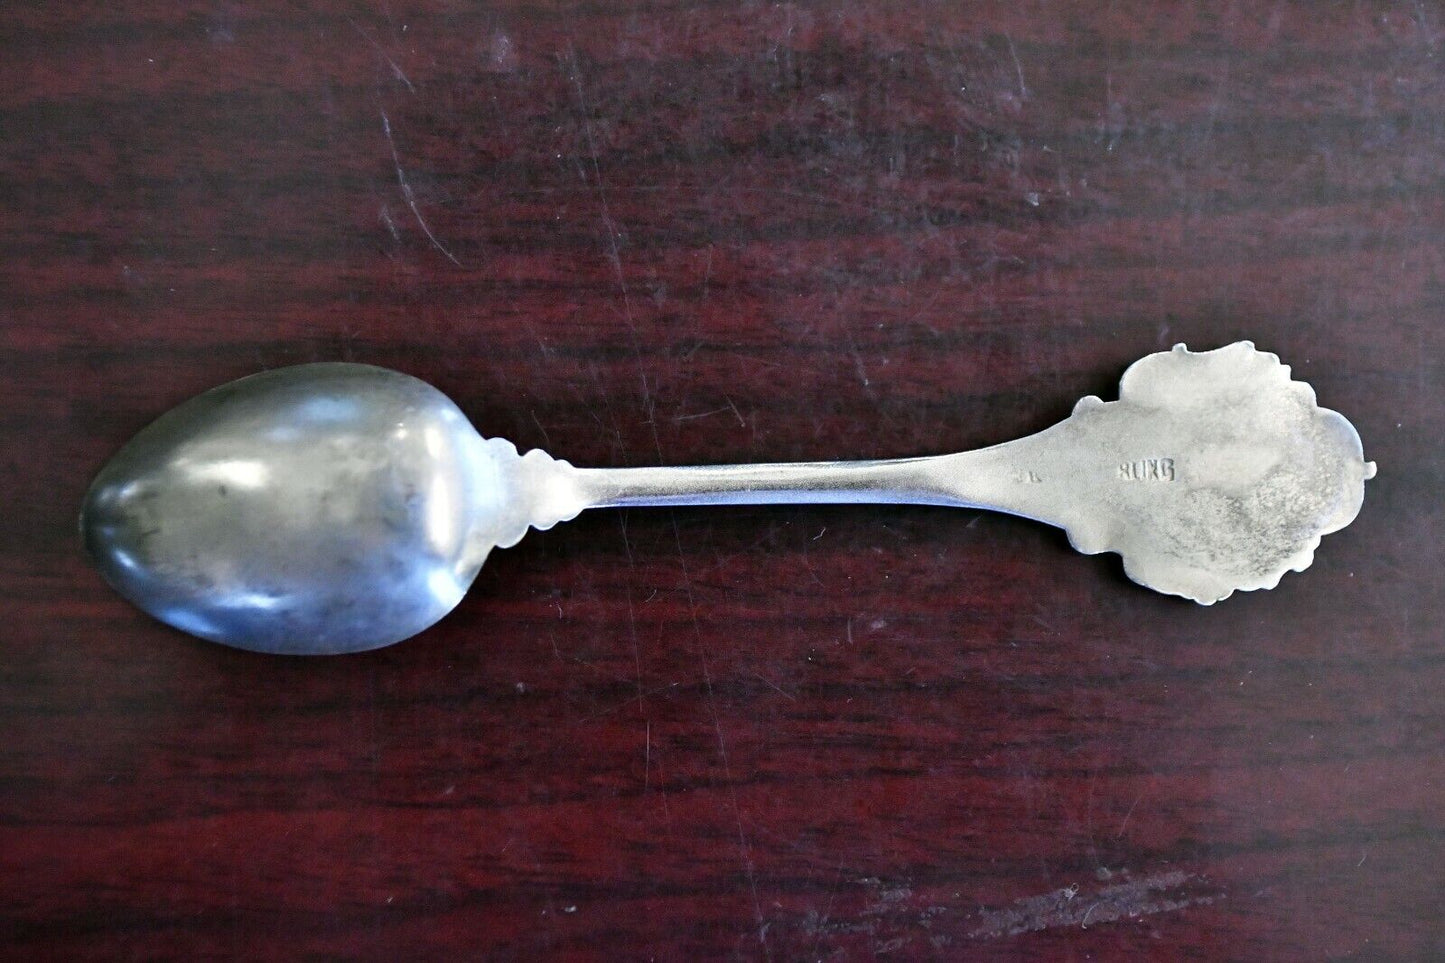 The Penetanguishene Canada Enameled Sterling Silver 4 1/4" Souvenir Spoon .5oz.